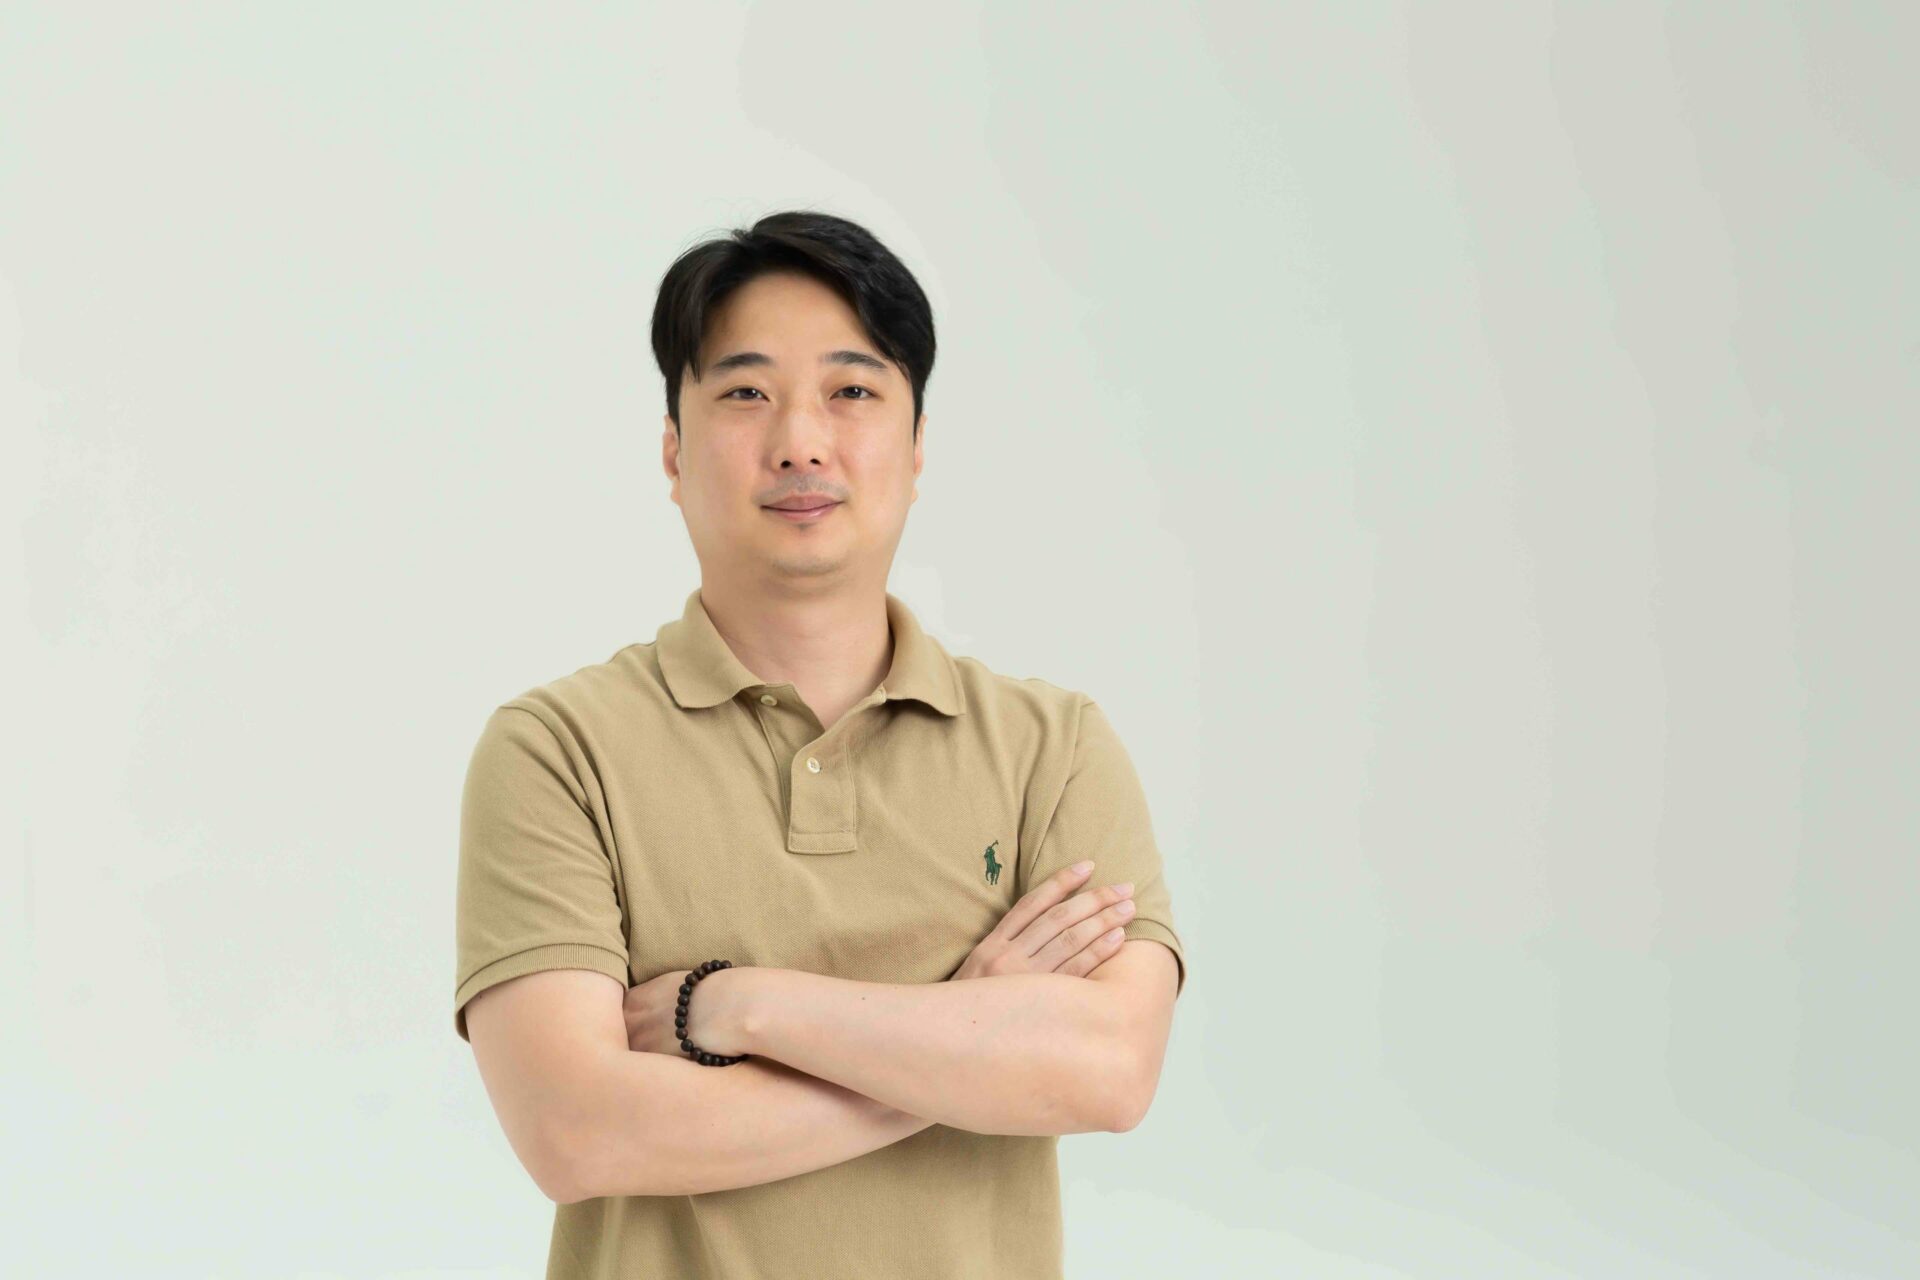 Korean startup MASTER.GG’s CEO Charlie Rhee talks about revolutionizing